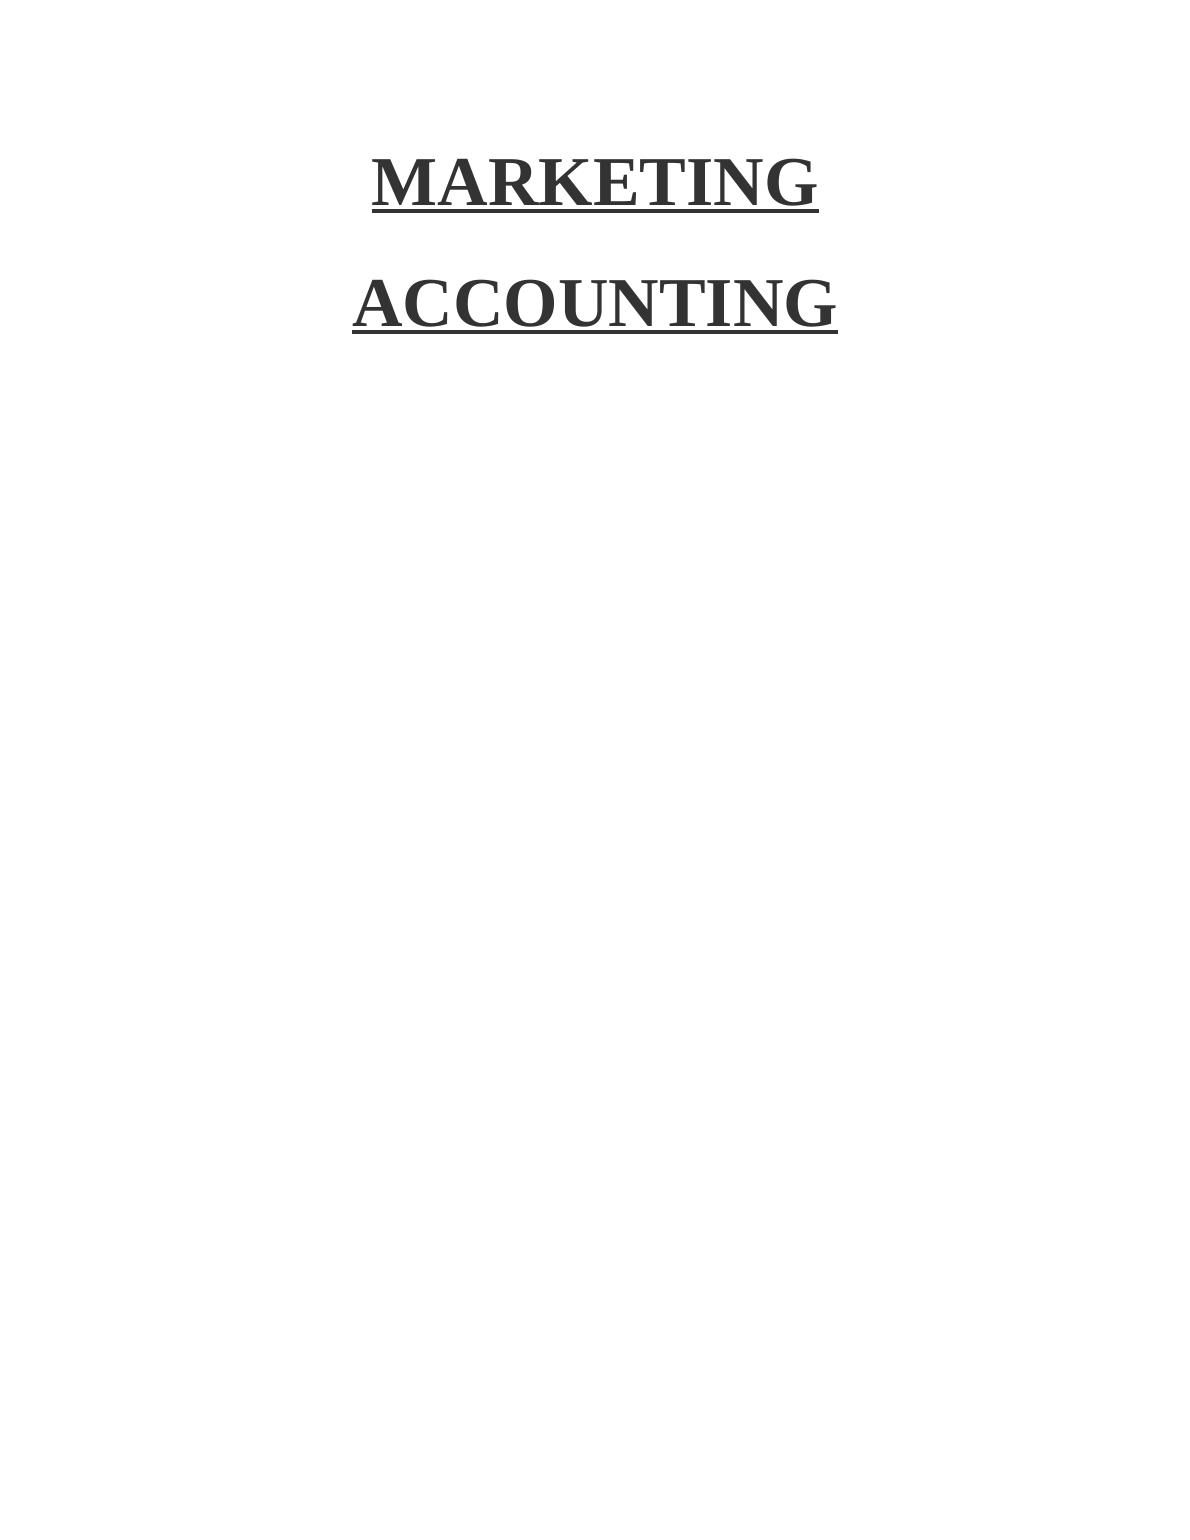 Marketing Accounting - PDF_1